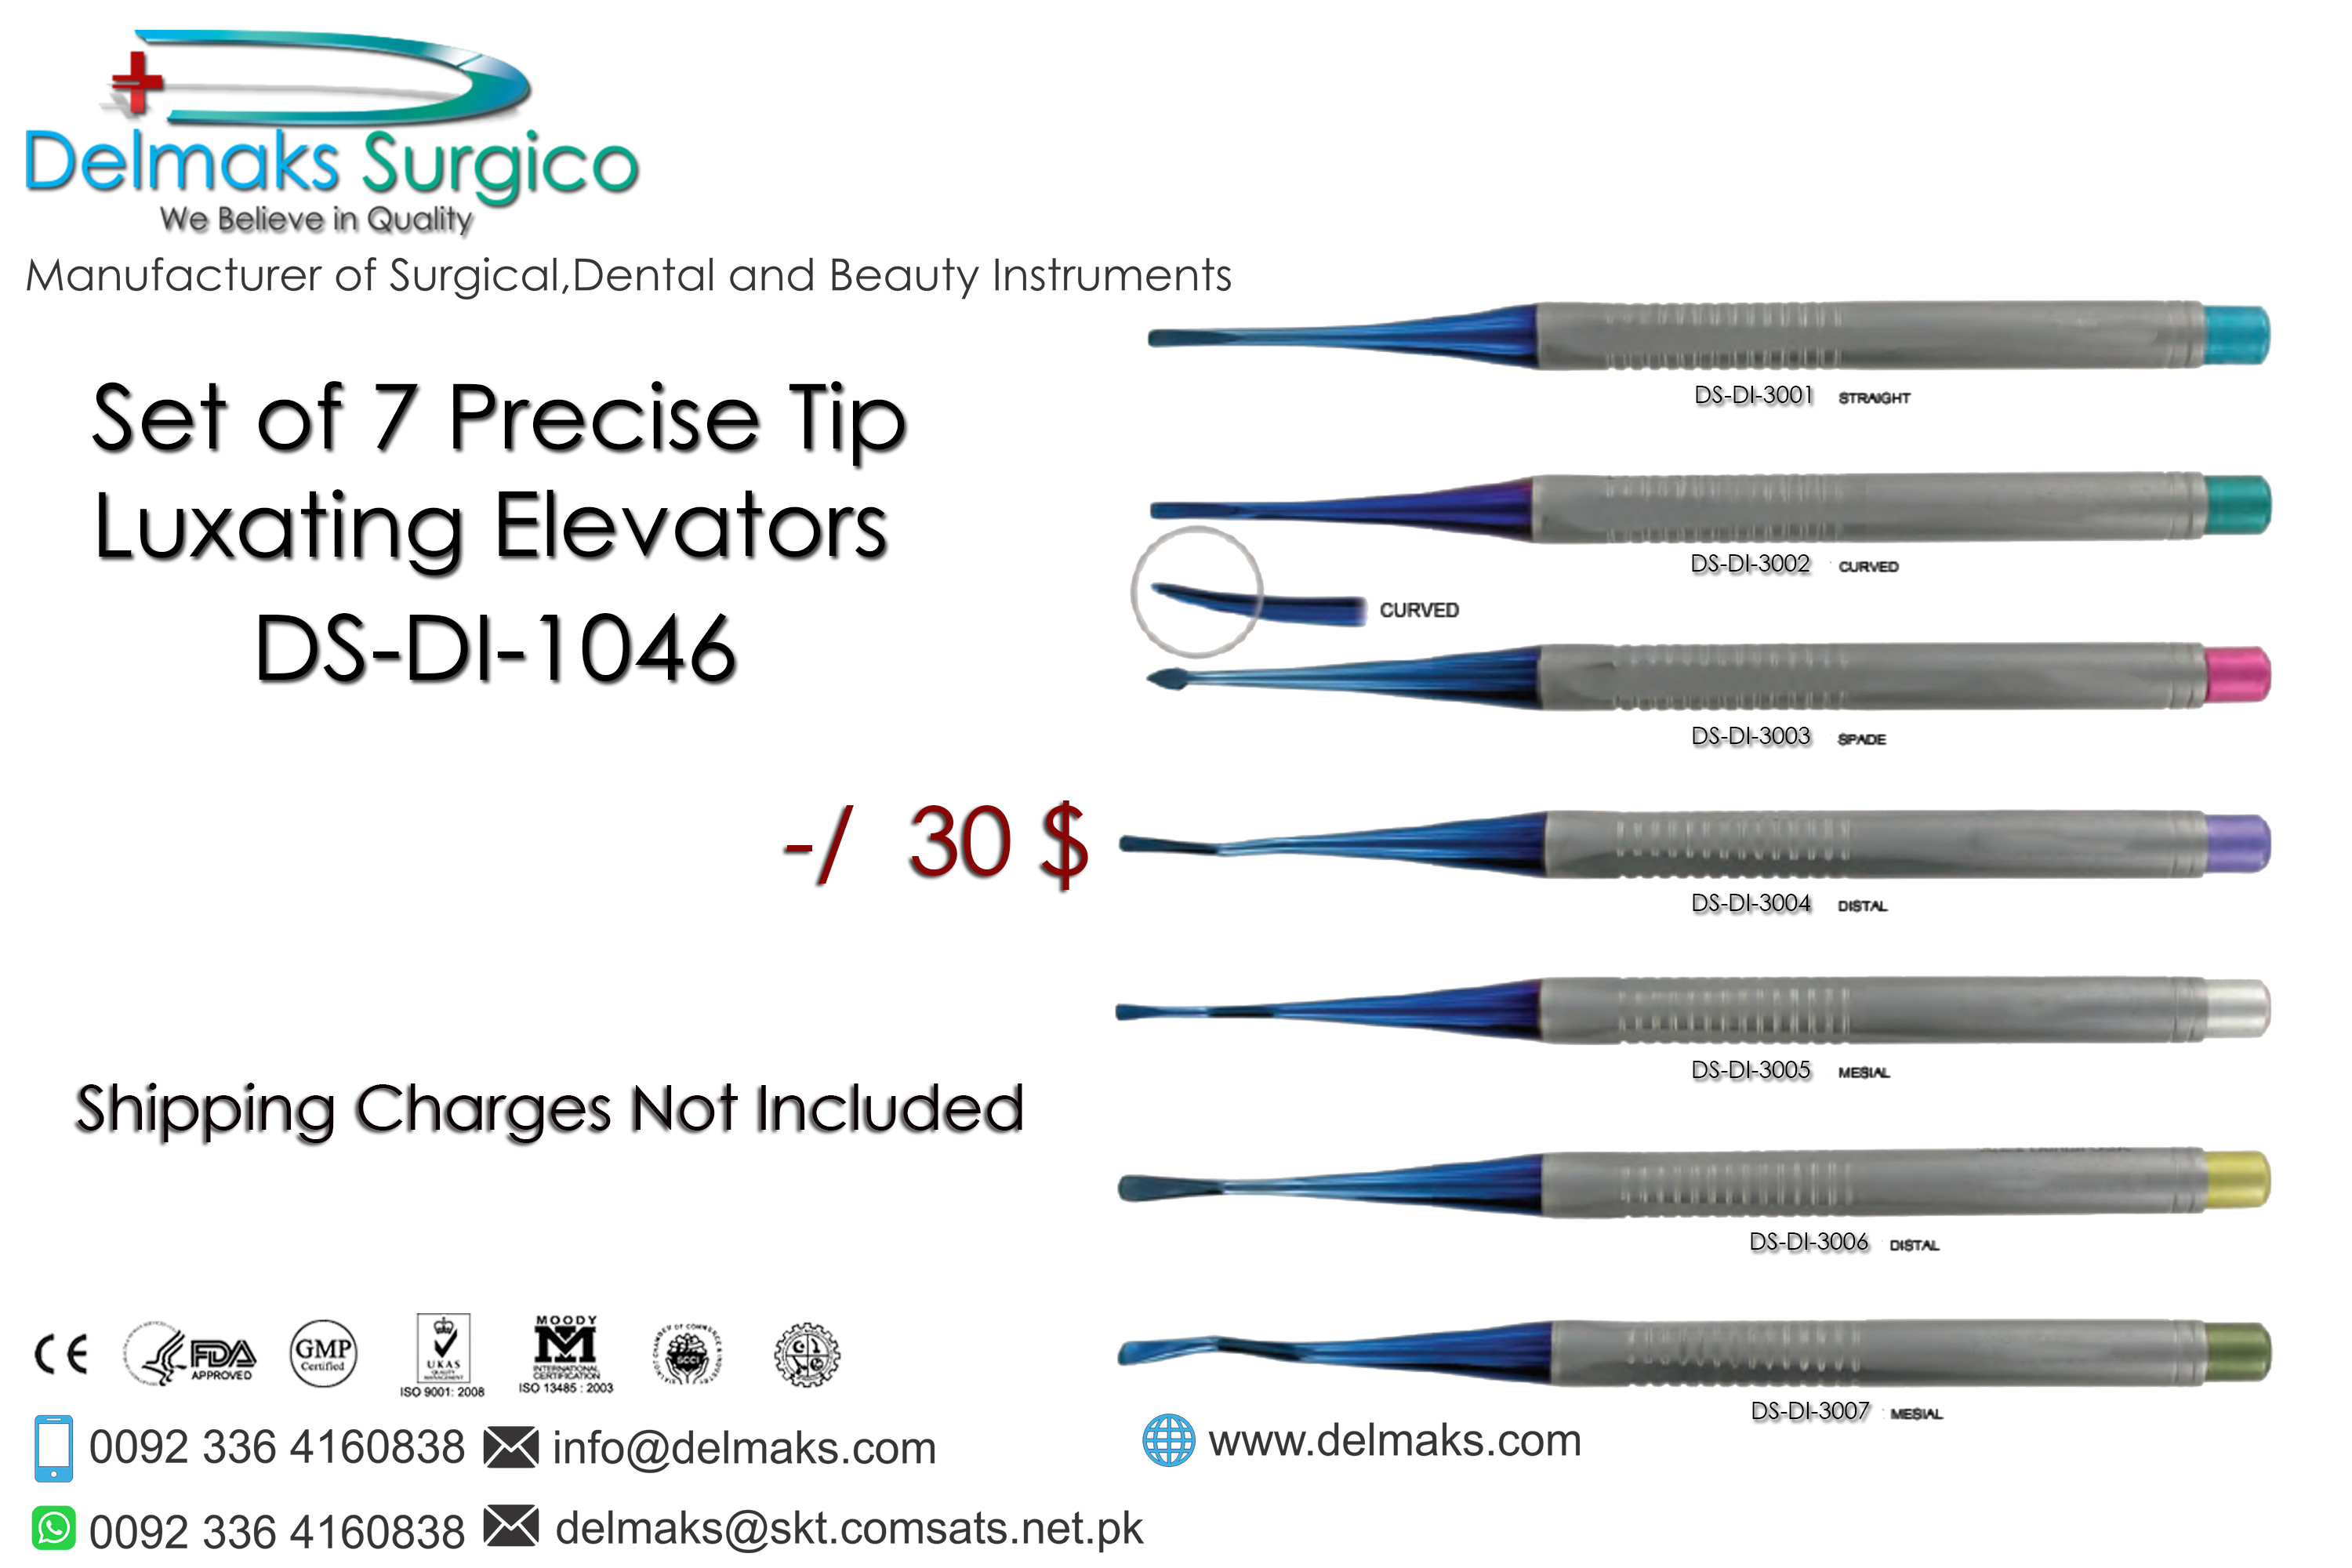 Set of 7 Precise Tip Luxating Elevators-Dental Implants-Dental Instruments-Delmaks Surgico